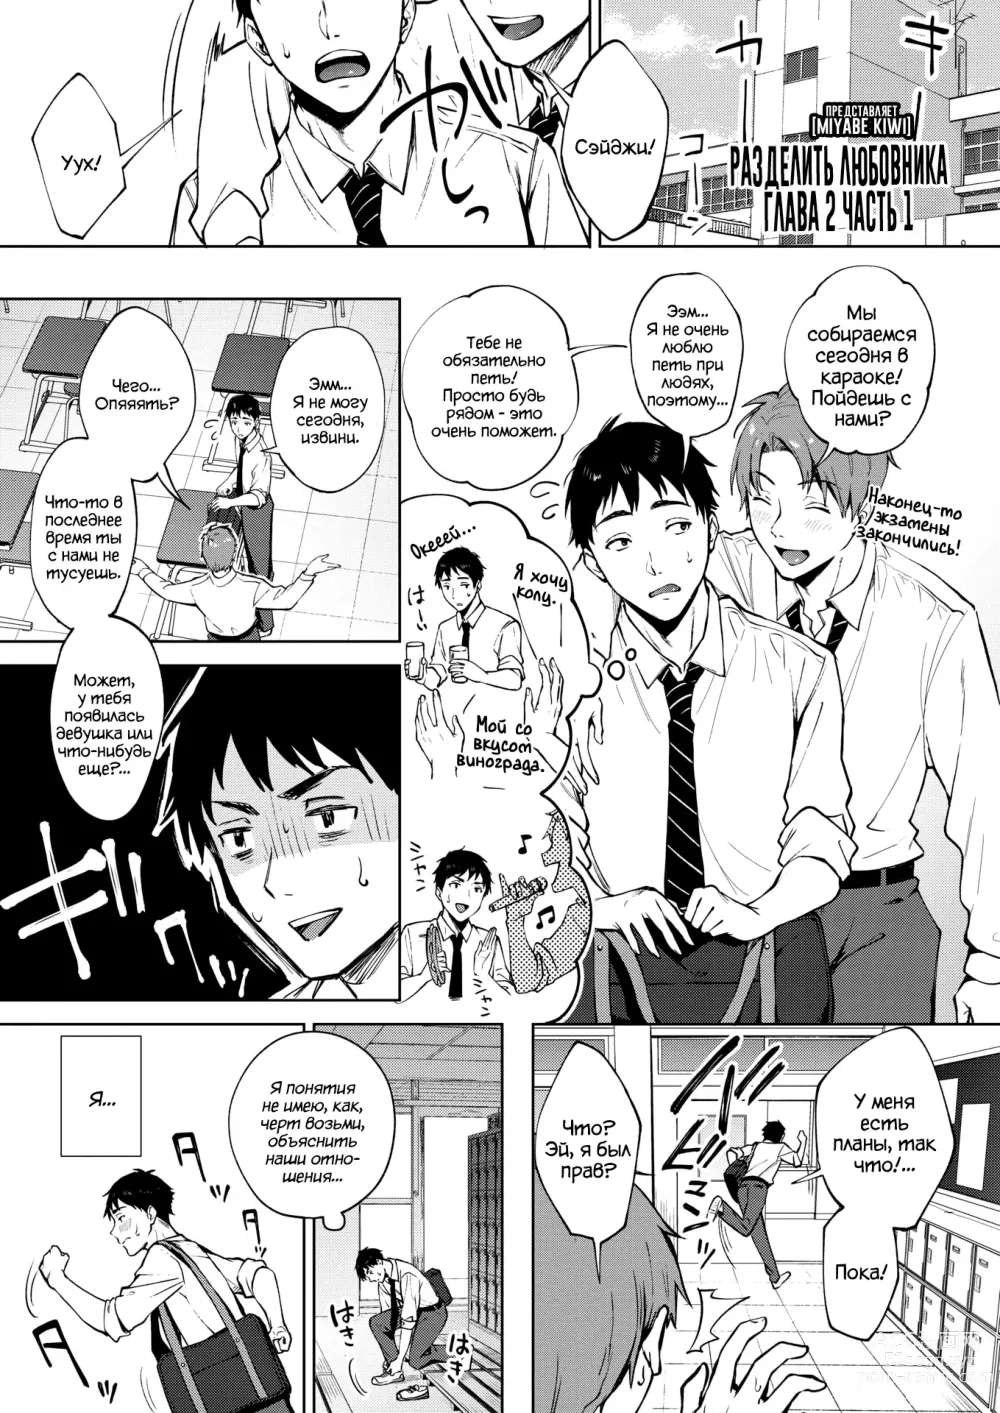 Page 1 of manga Разделить любовника 2